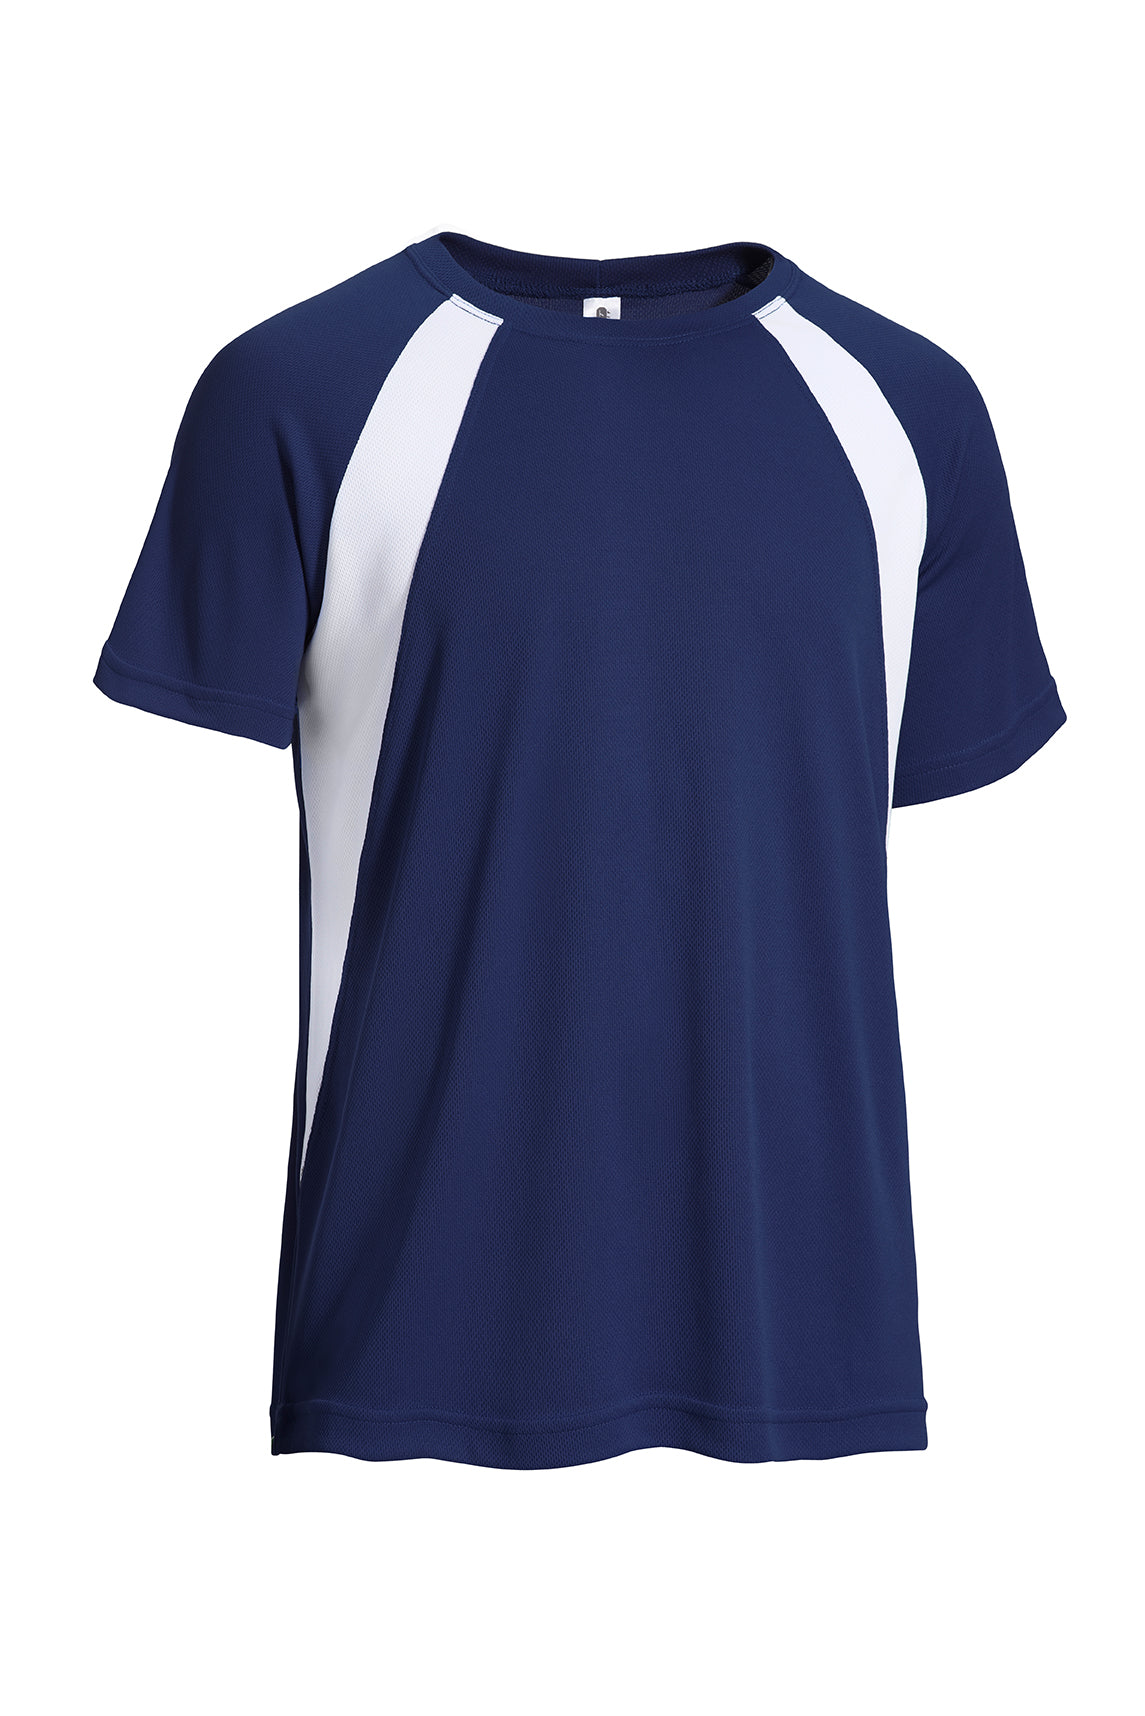 Expert Brand Wholesale Made in USA Blanks Men's T-Shirt Oxymesh Raglan Colorblock Tee in navy#navy